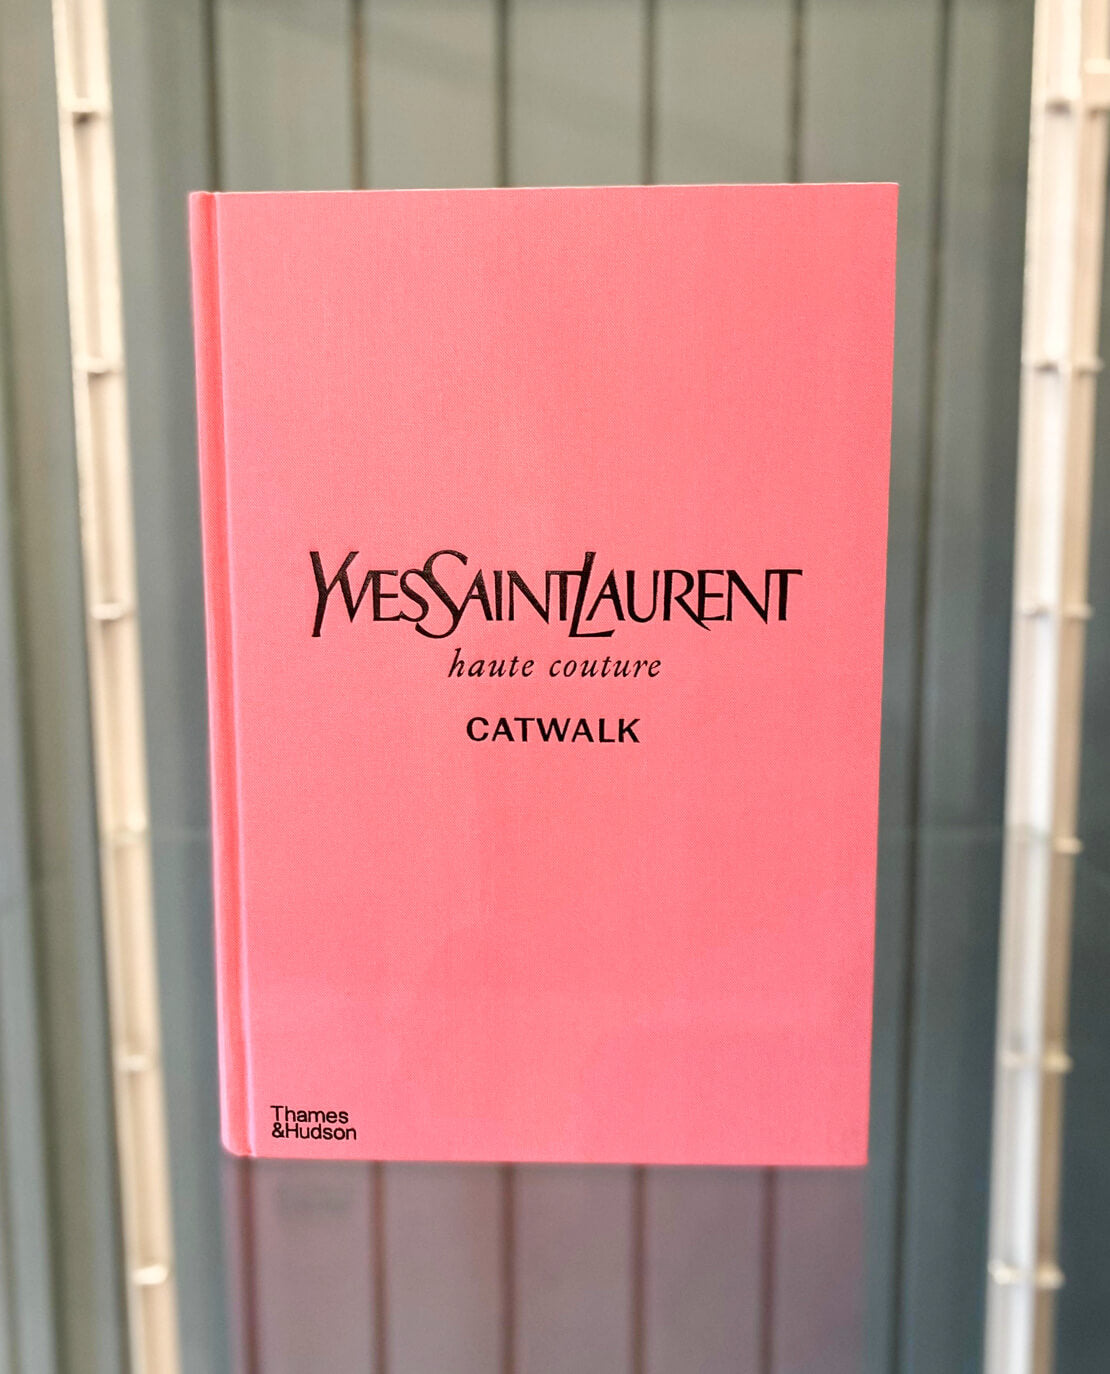 New Mags Yves Saint Laurent Catwalk